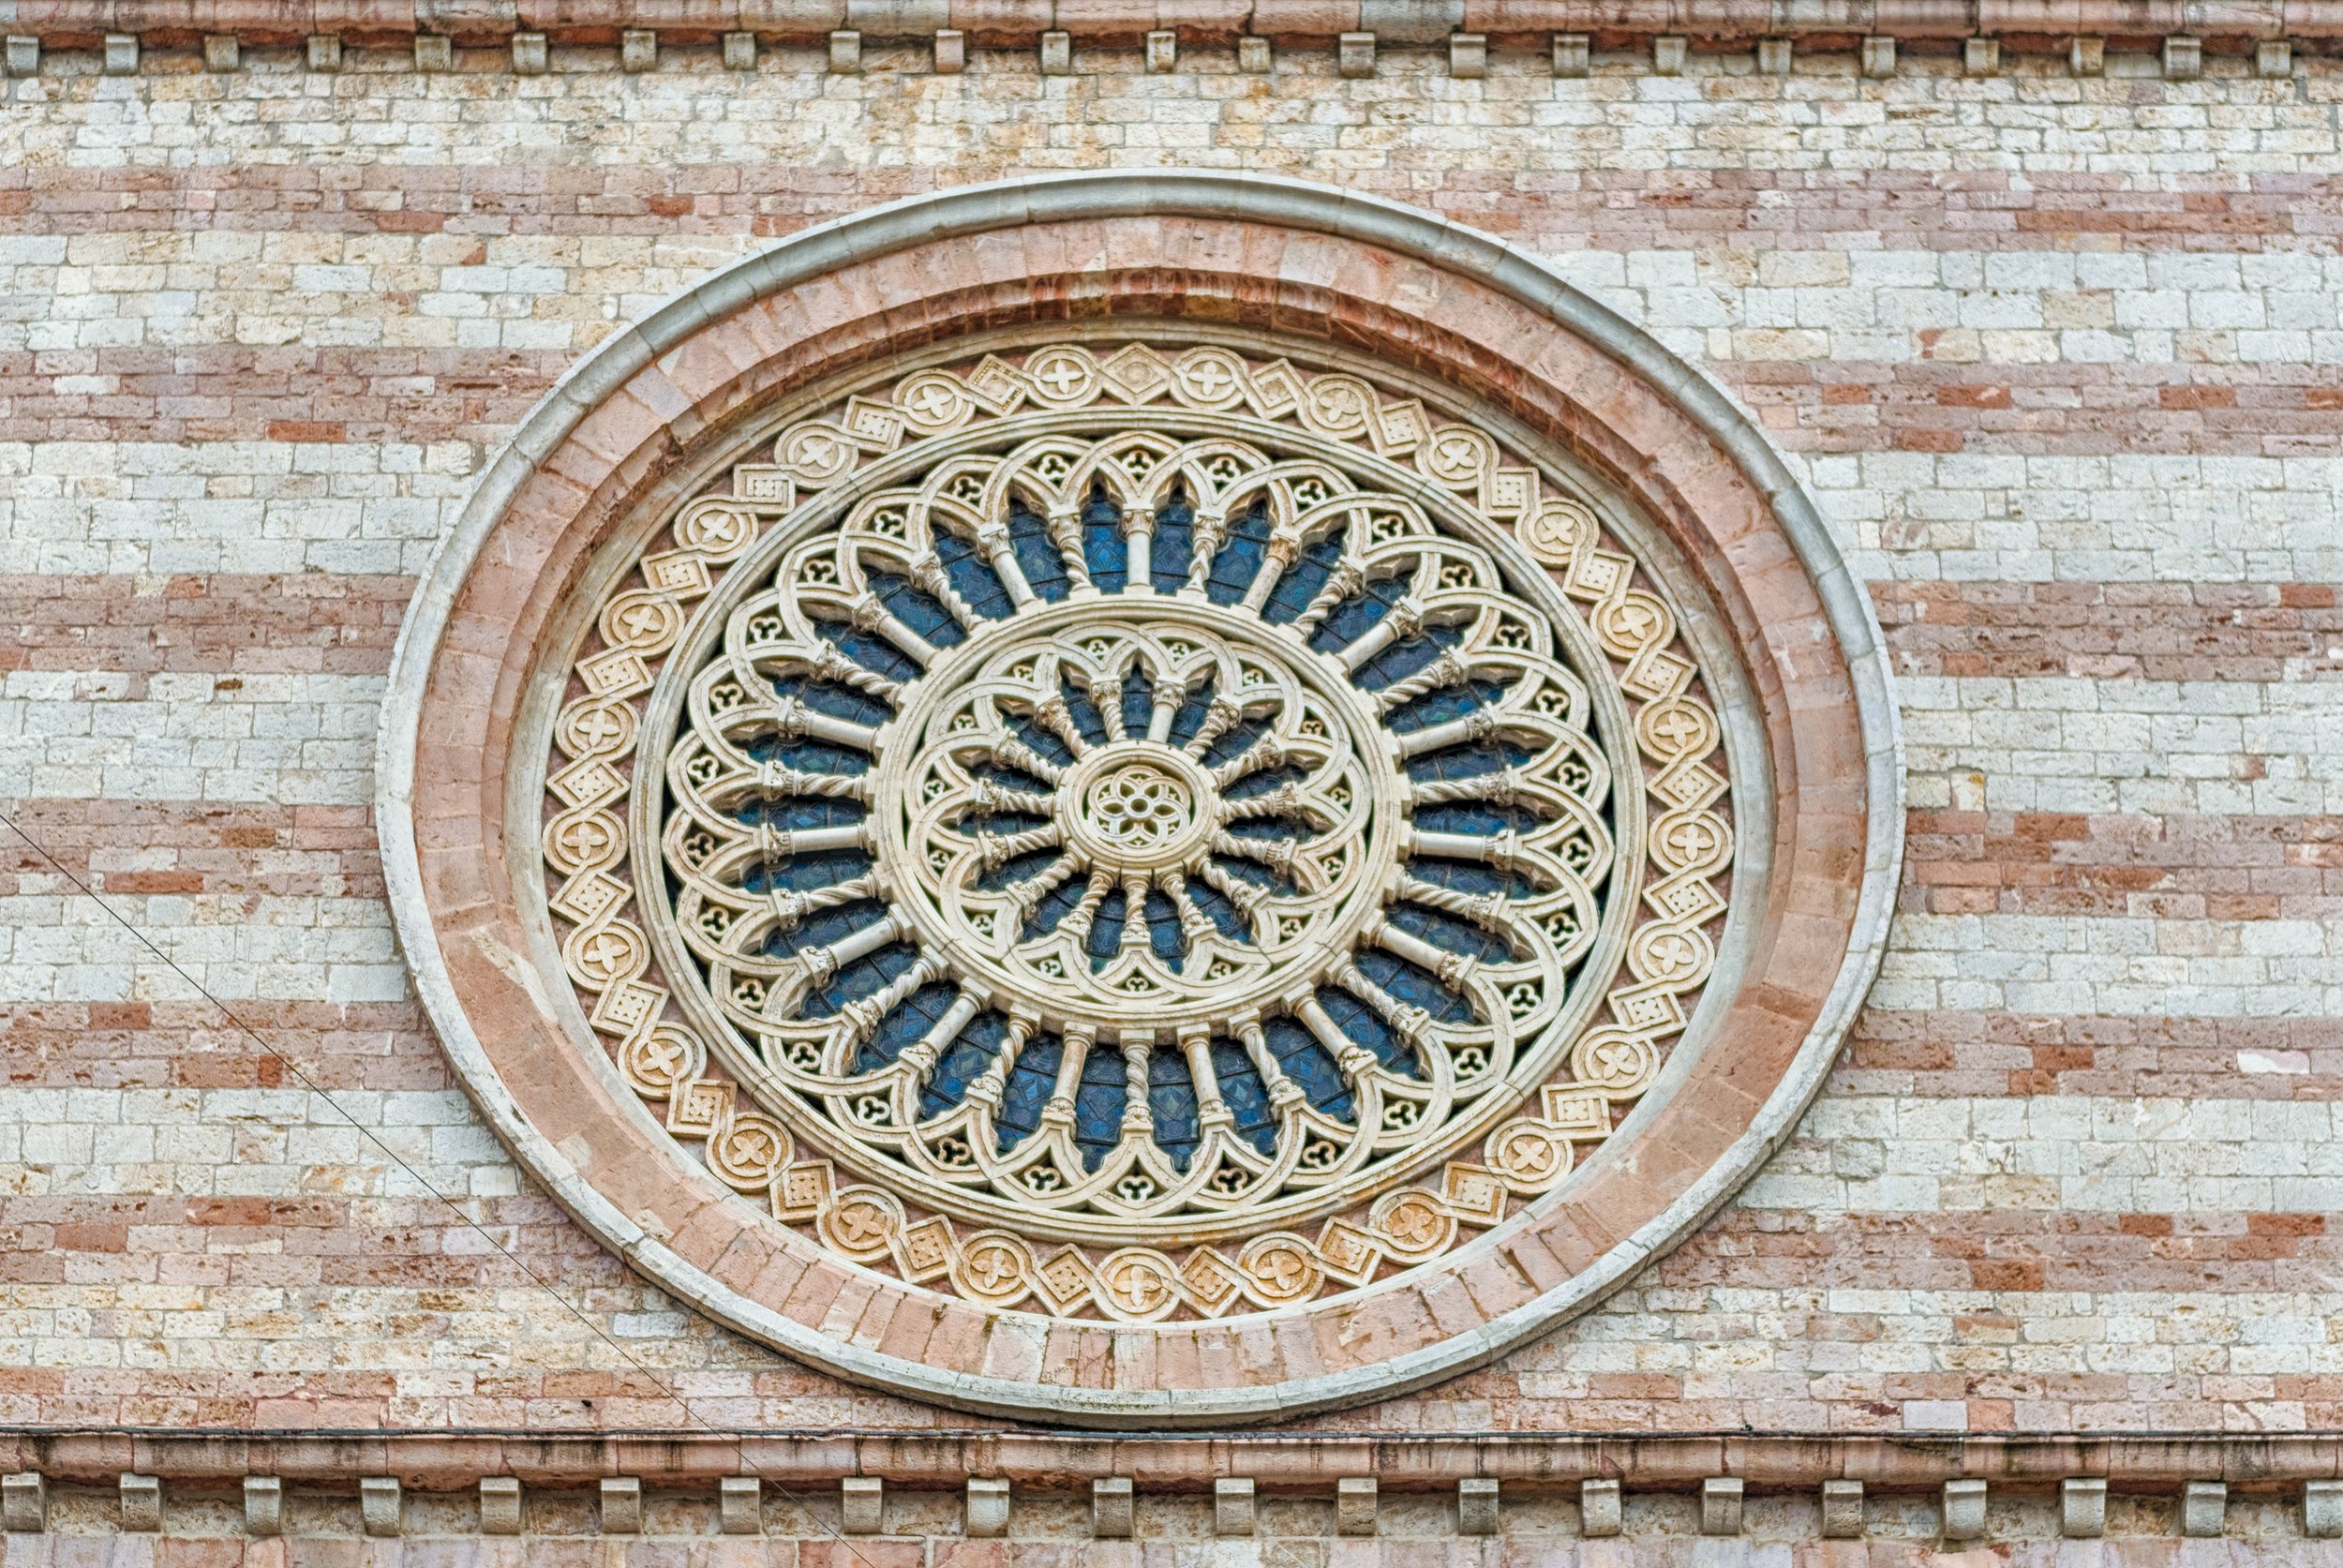 rose-window-facade-medieval-basilica-saint-clare-assisi-italy.jpg